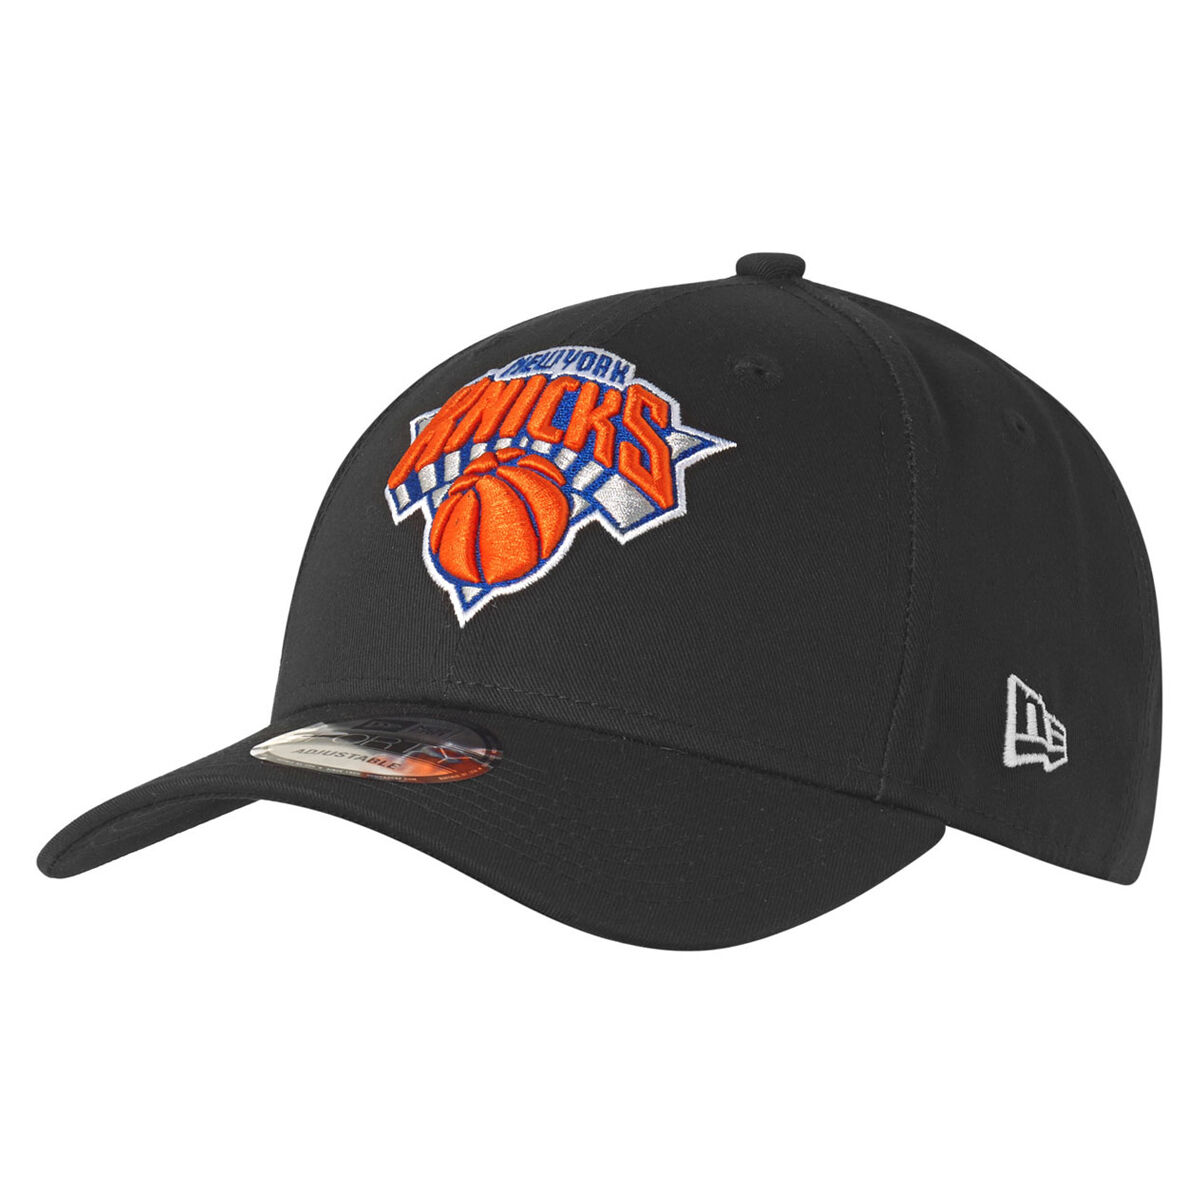  New Era NBA 9FORTY New York Knicks Hat The League